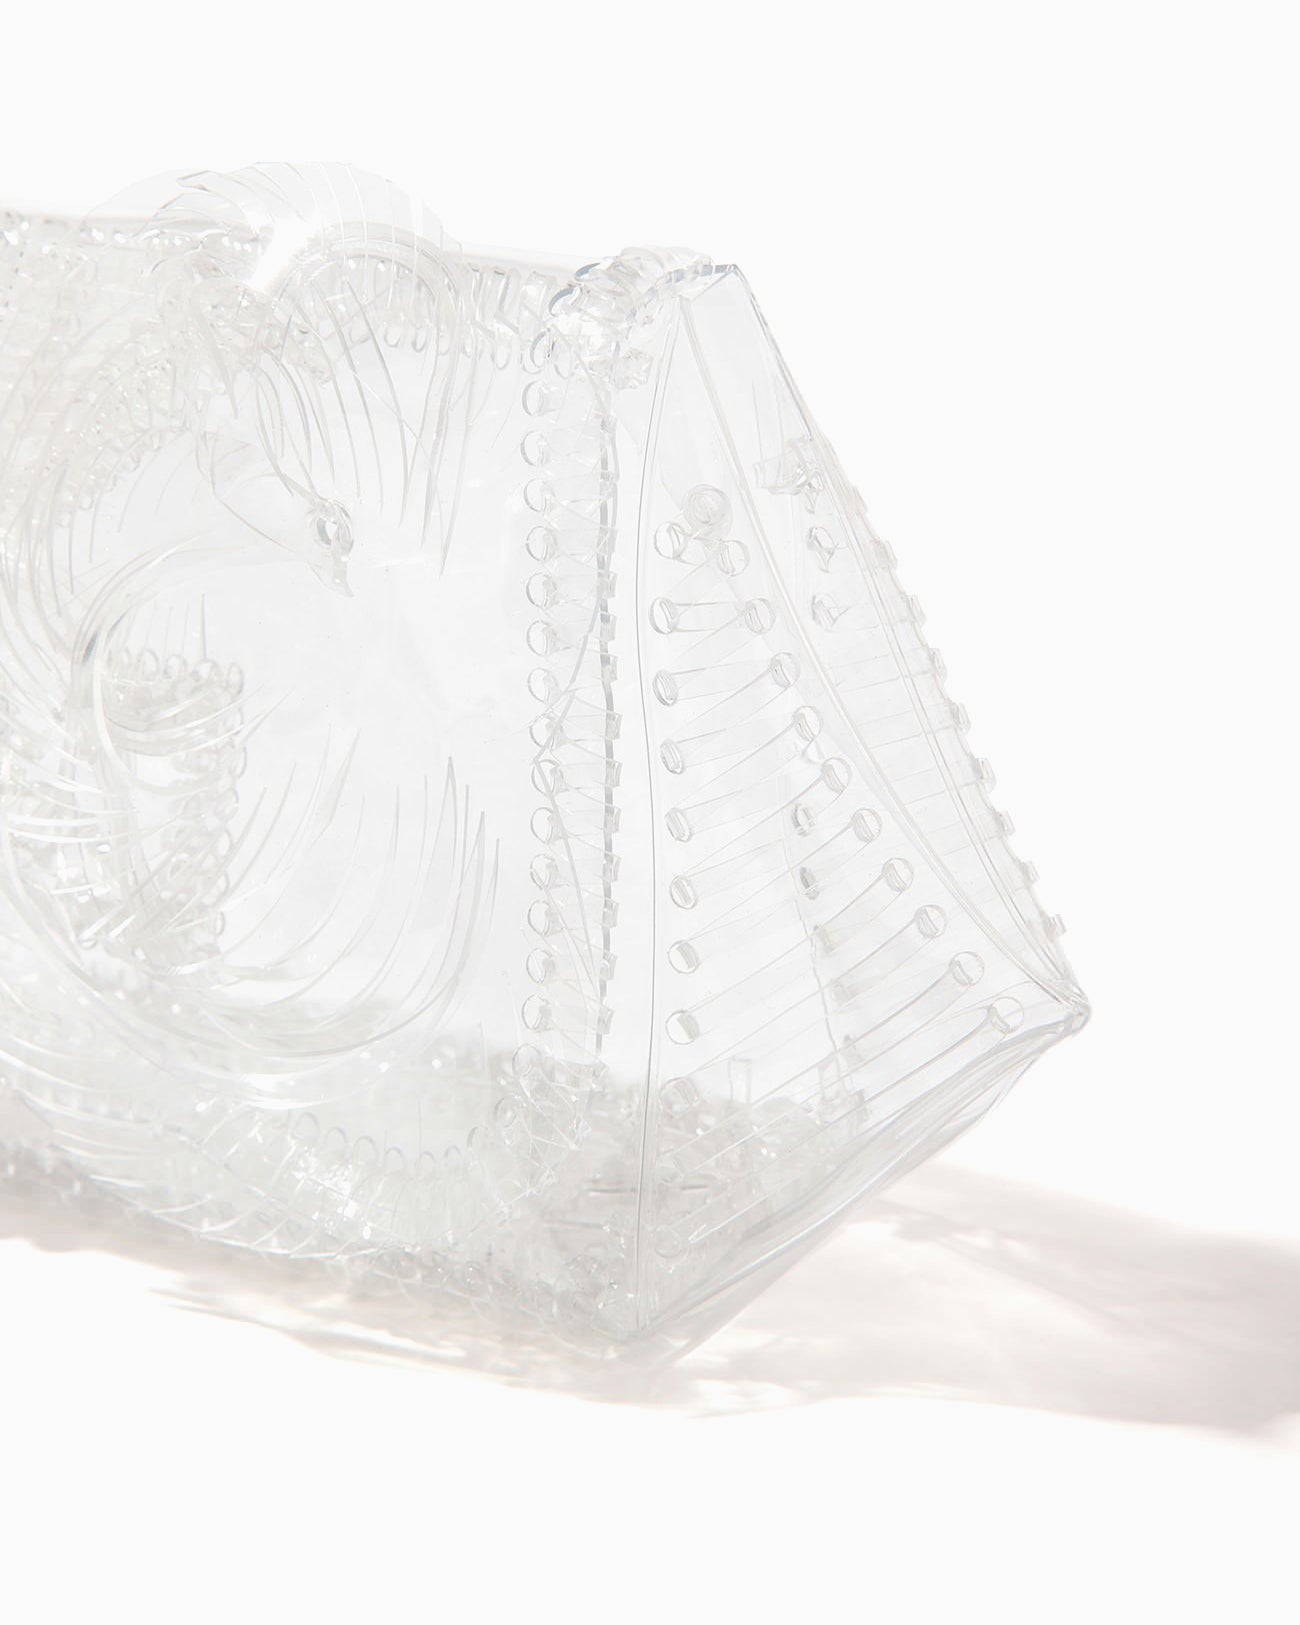 Transparent Sculptural Clutch Bag - clear